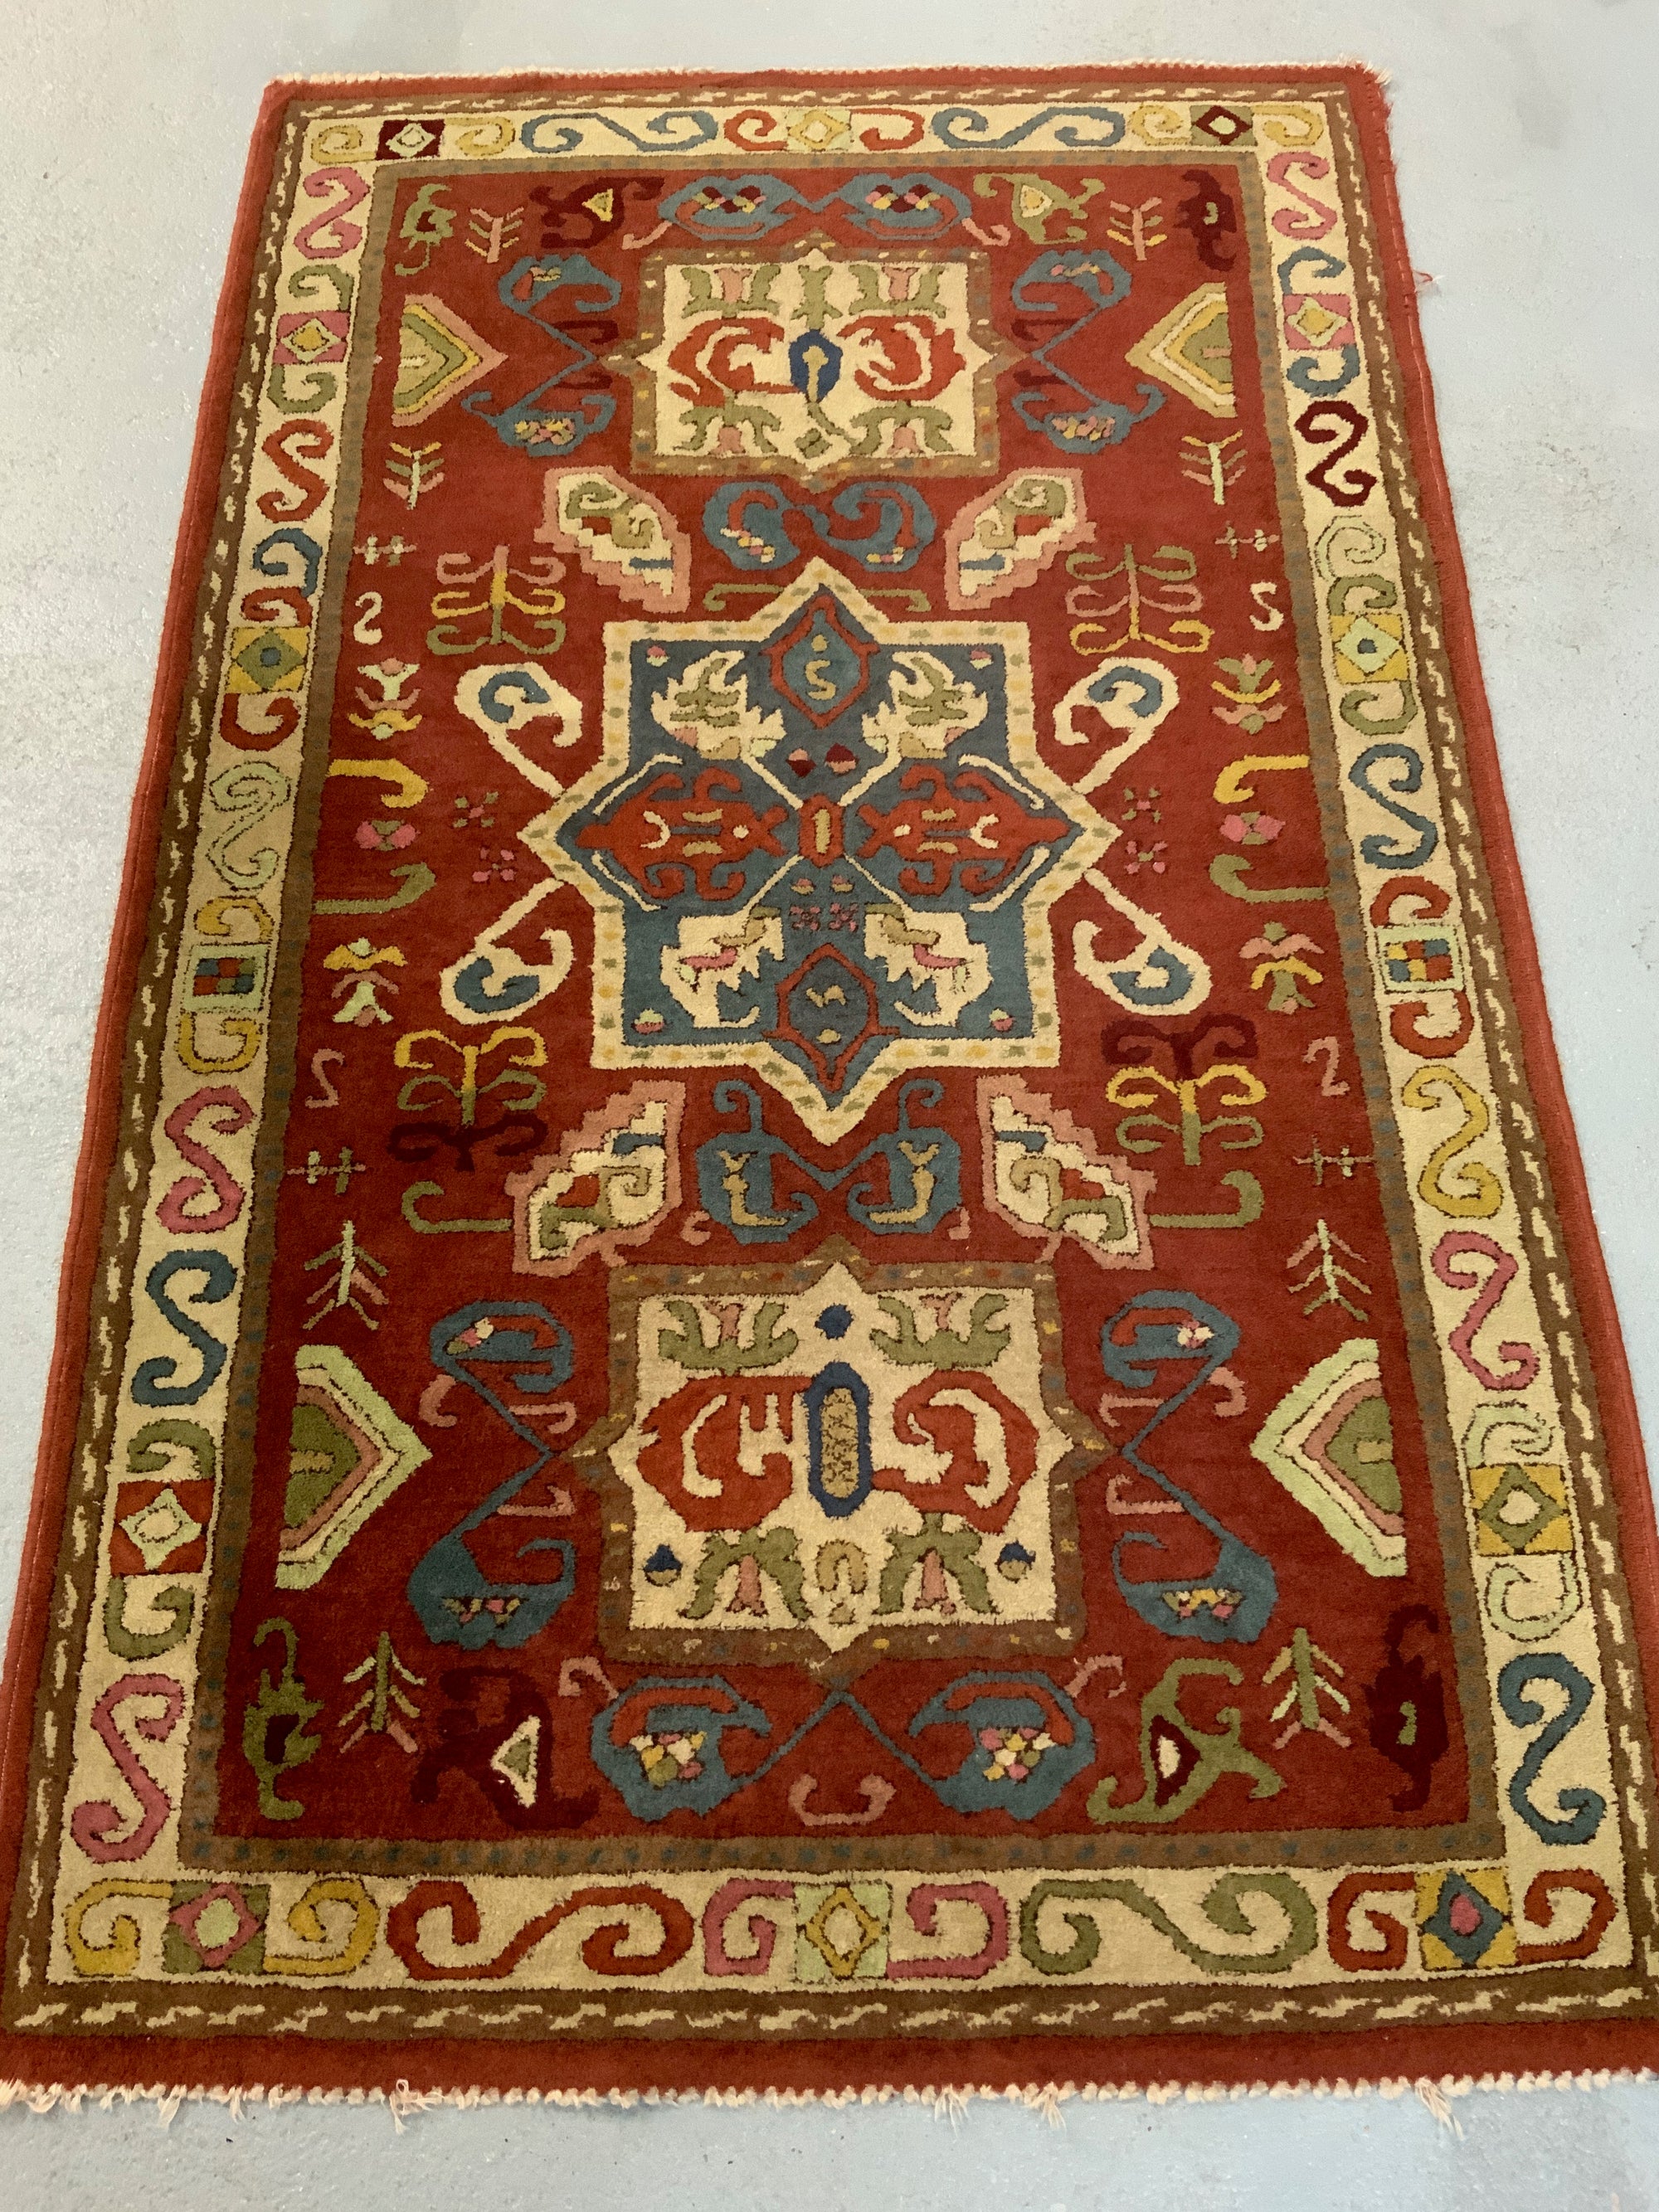 Tetex rug of Azeri late 18th cent design (154 x 96cm)